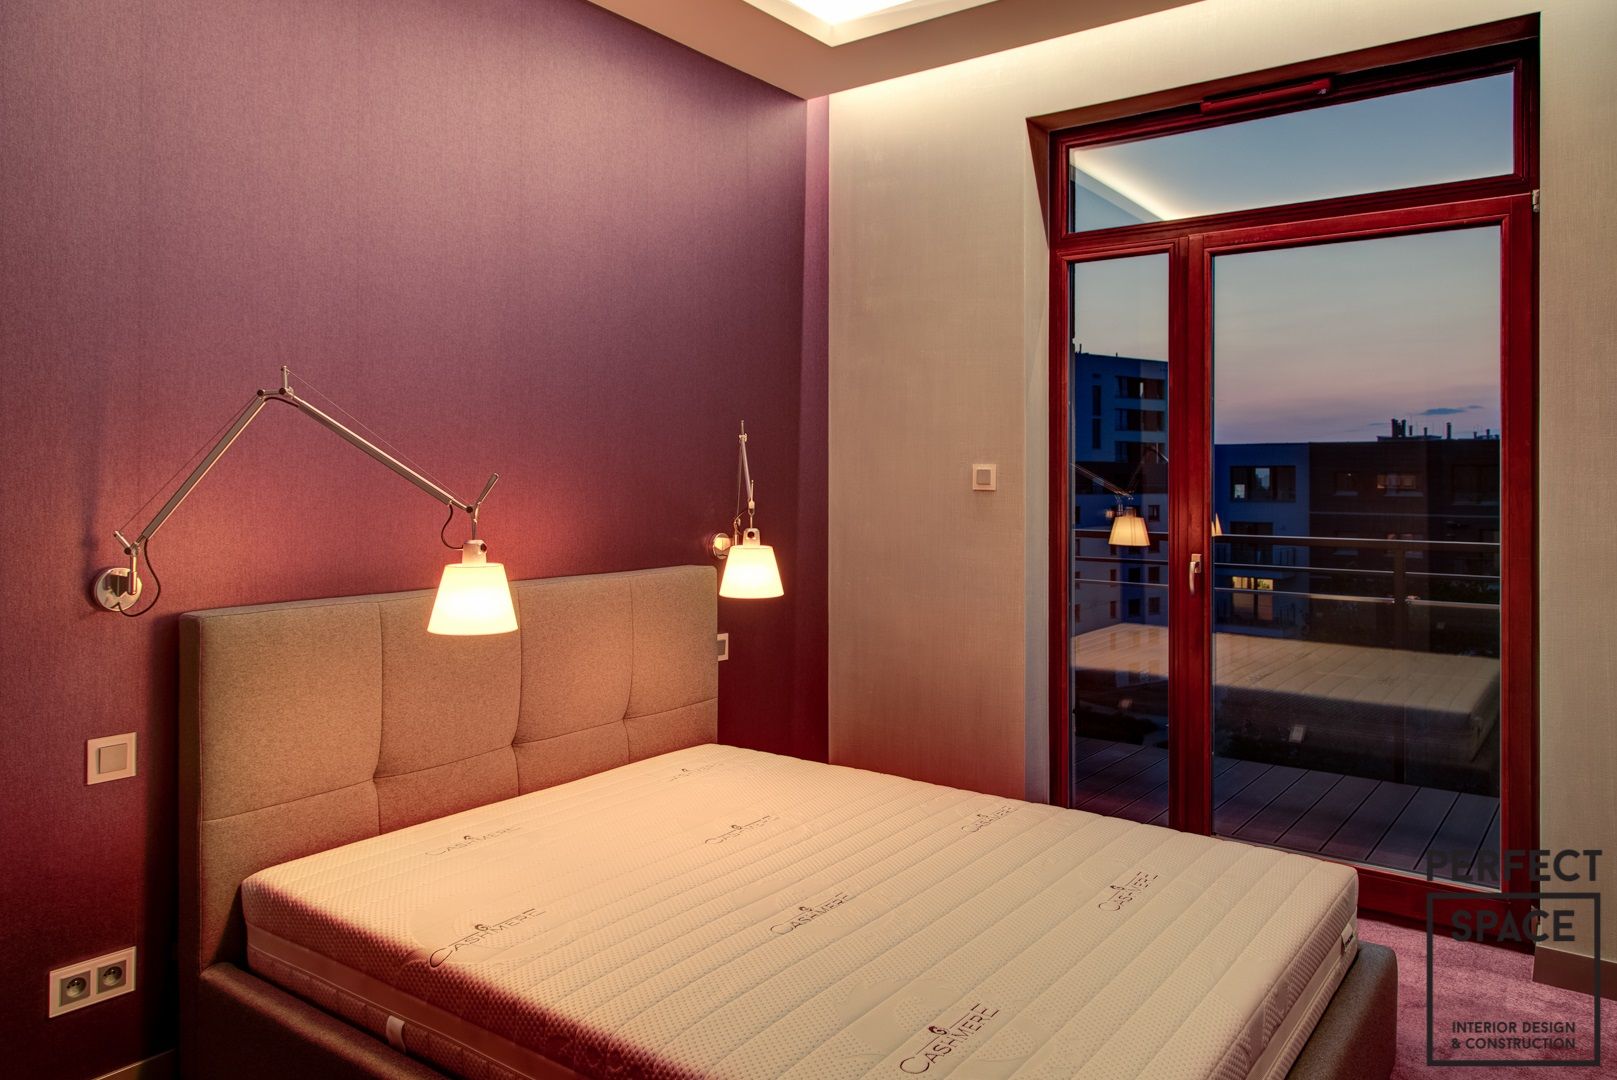 130 m Klasy i Elegancji, Perfect Space Perfect Space Dormitorios modernos